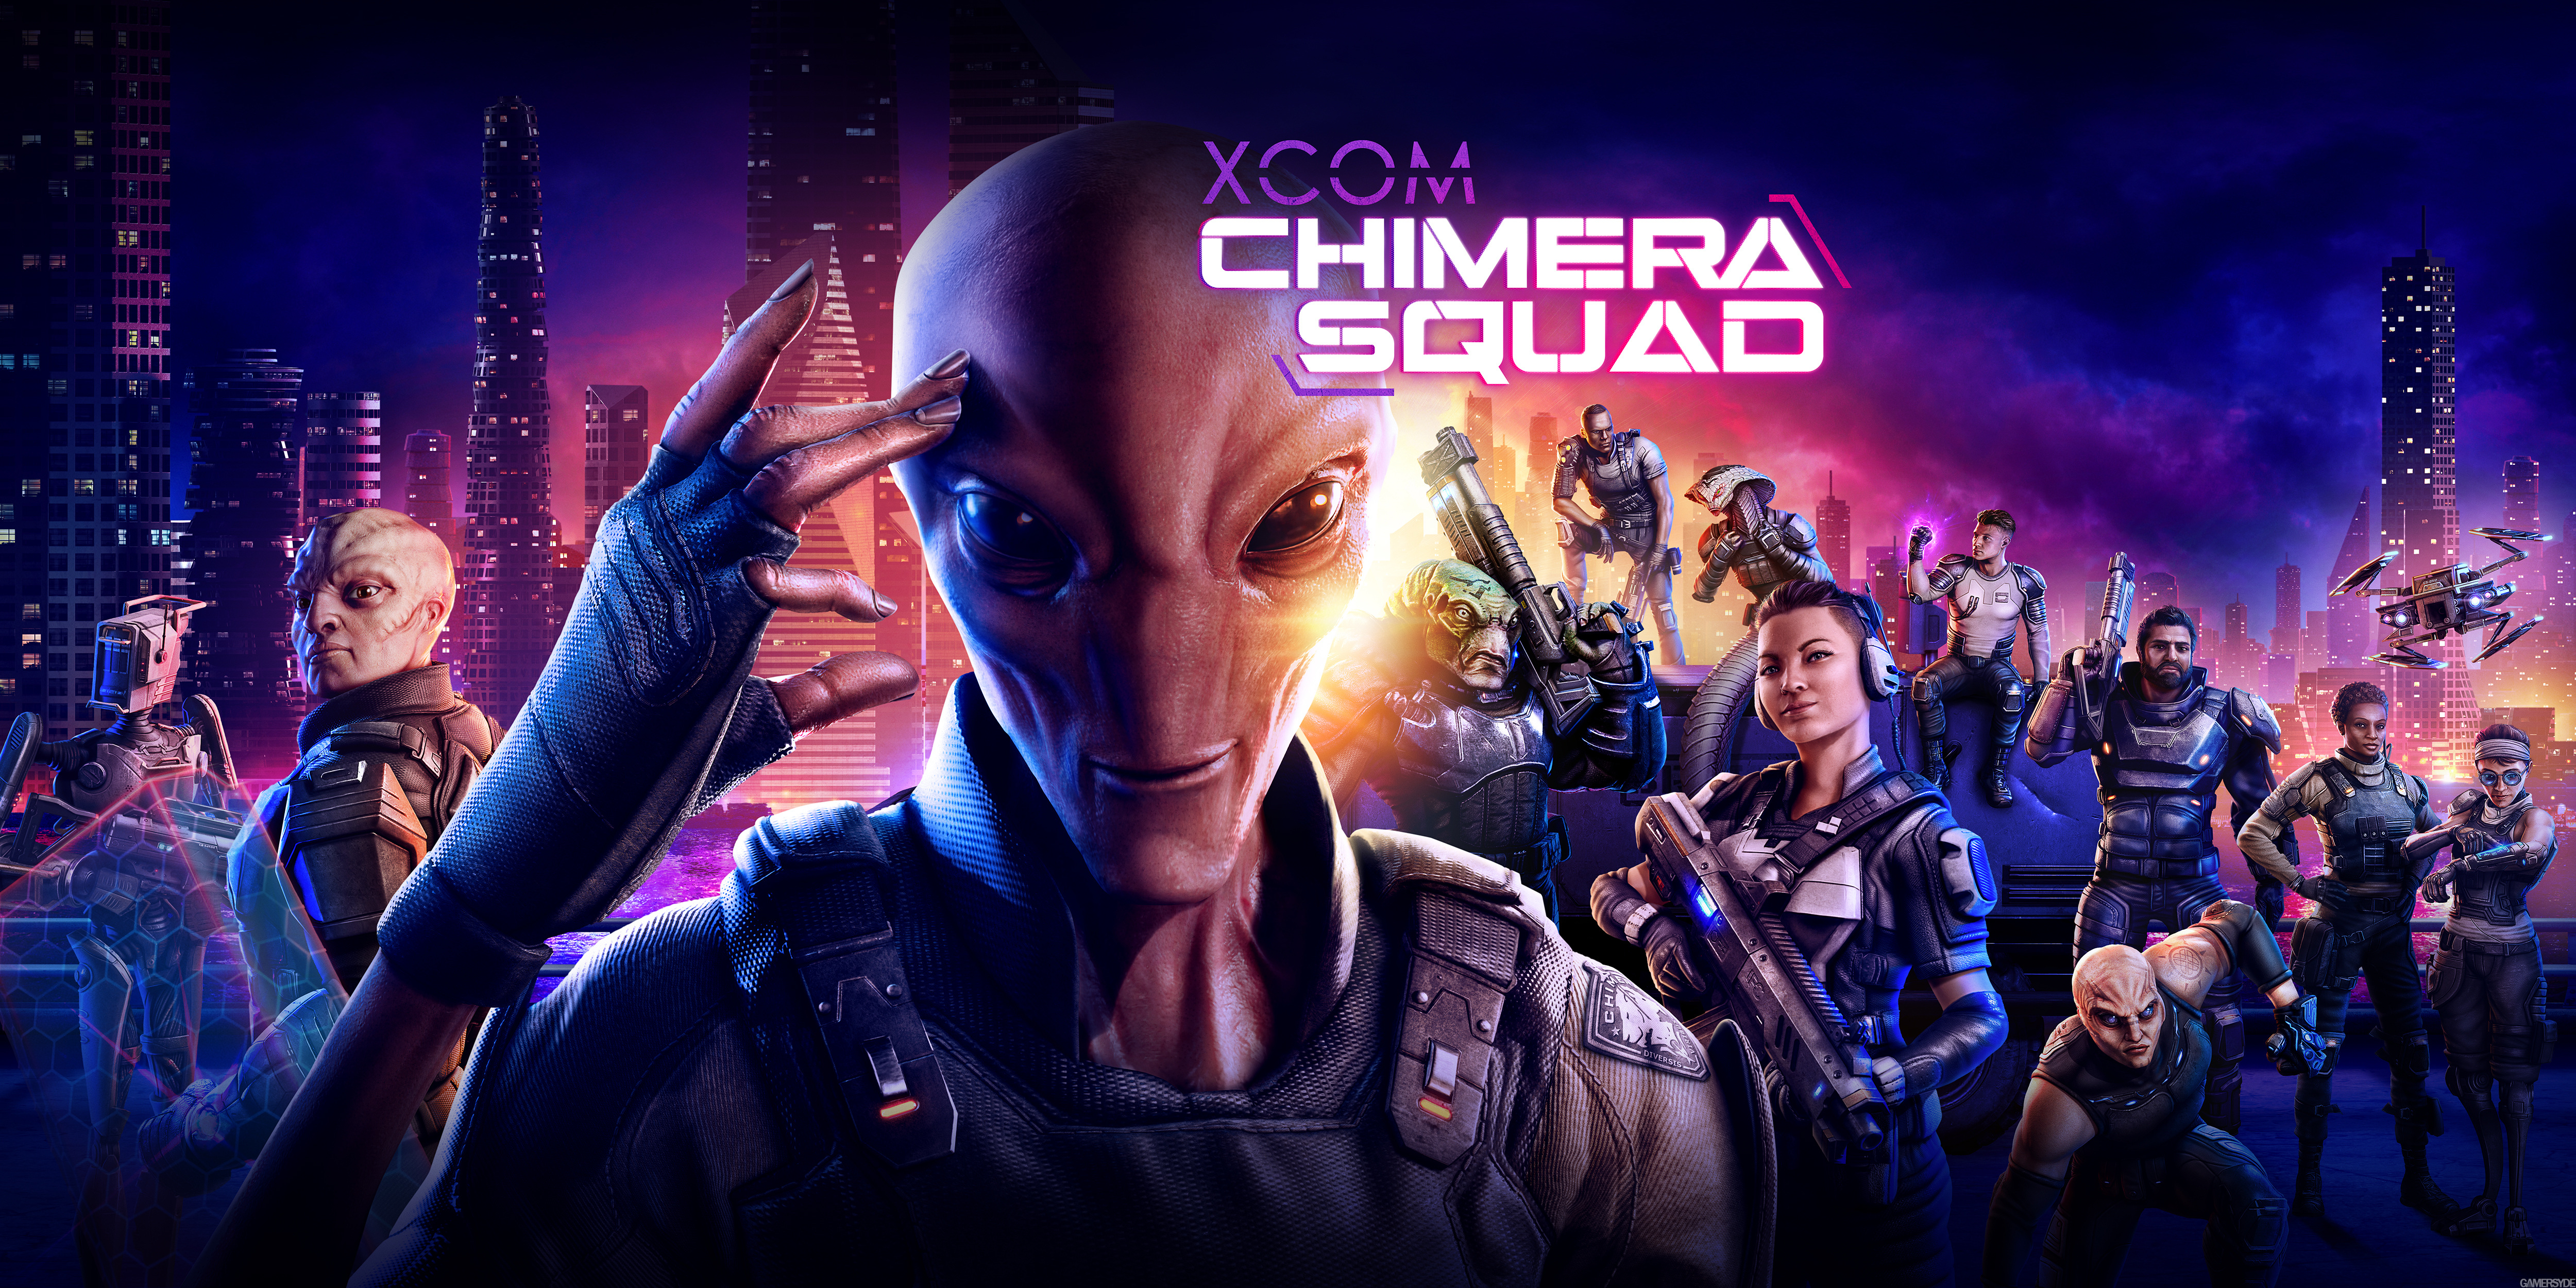 Chimera Squad Game Wallpaper HD Games 4k Image